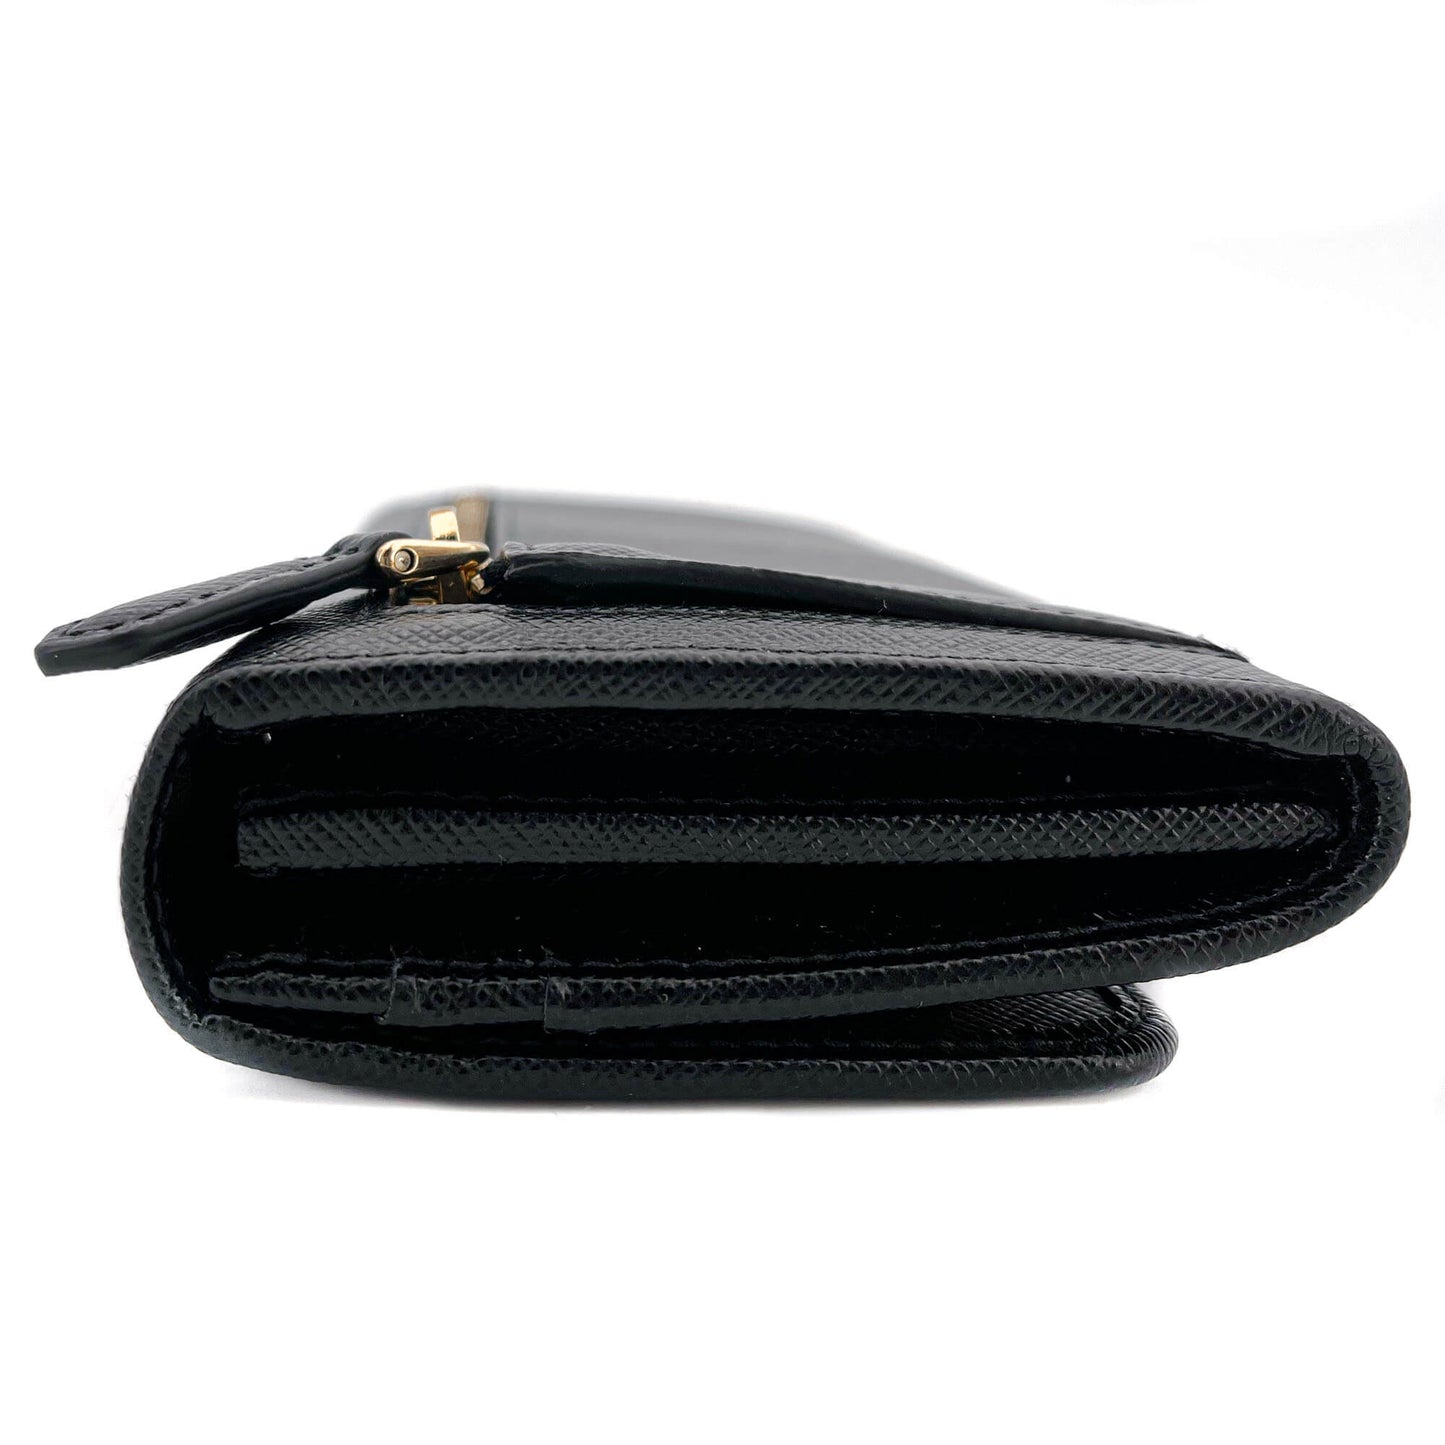 Second hand Prada Black Saffiano Wallet Large - Tabita Bags